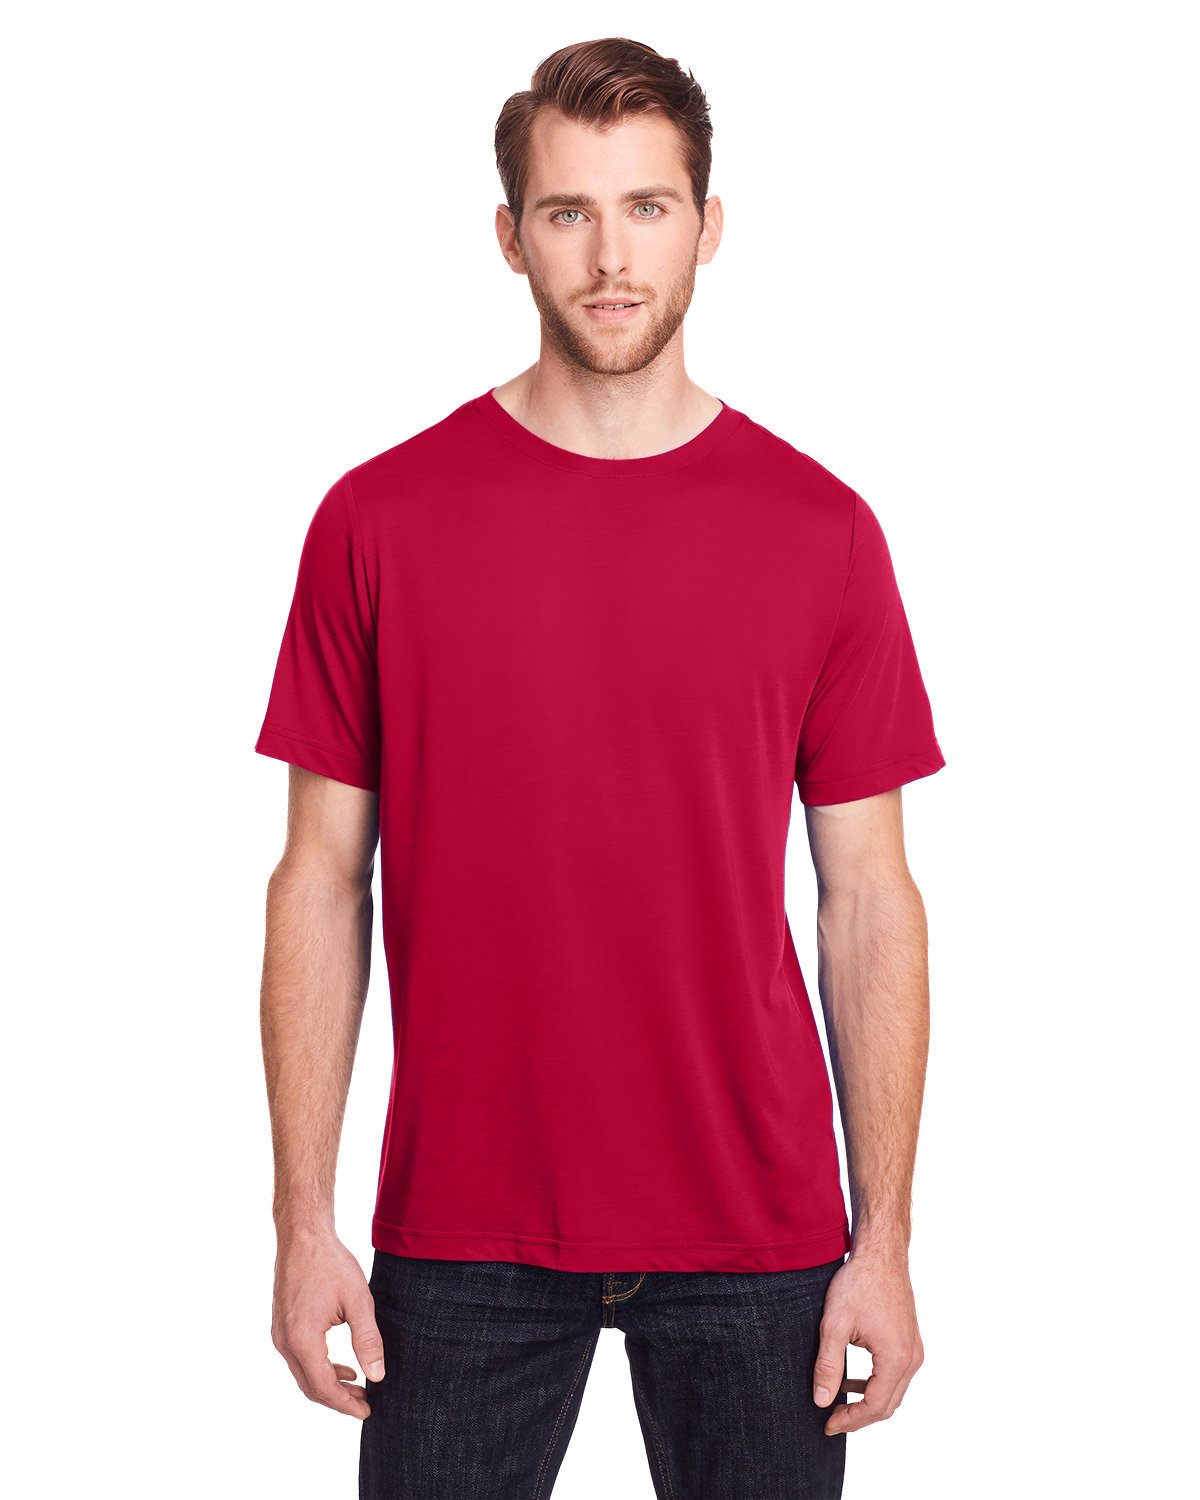 CORE365 Adult Fusion ChromaSoft Performance T-Shirt CLASSIC RED 